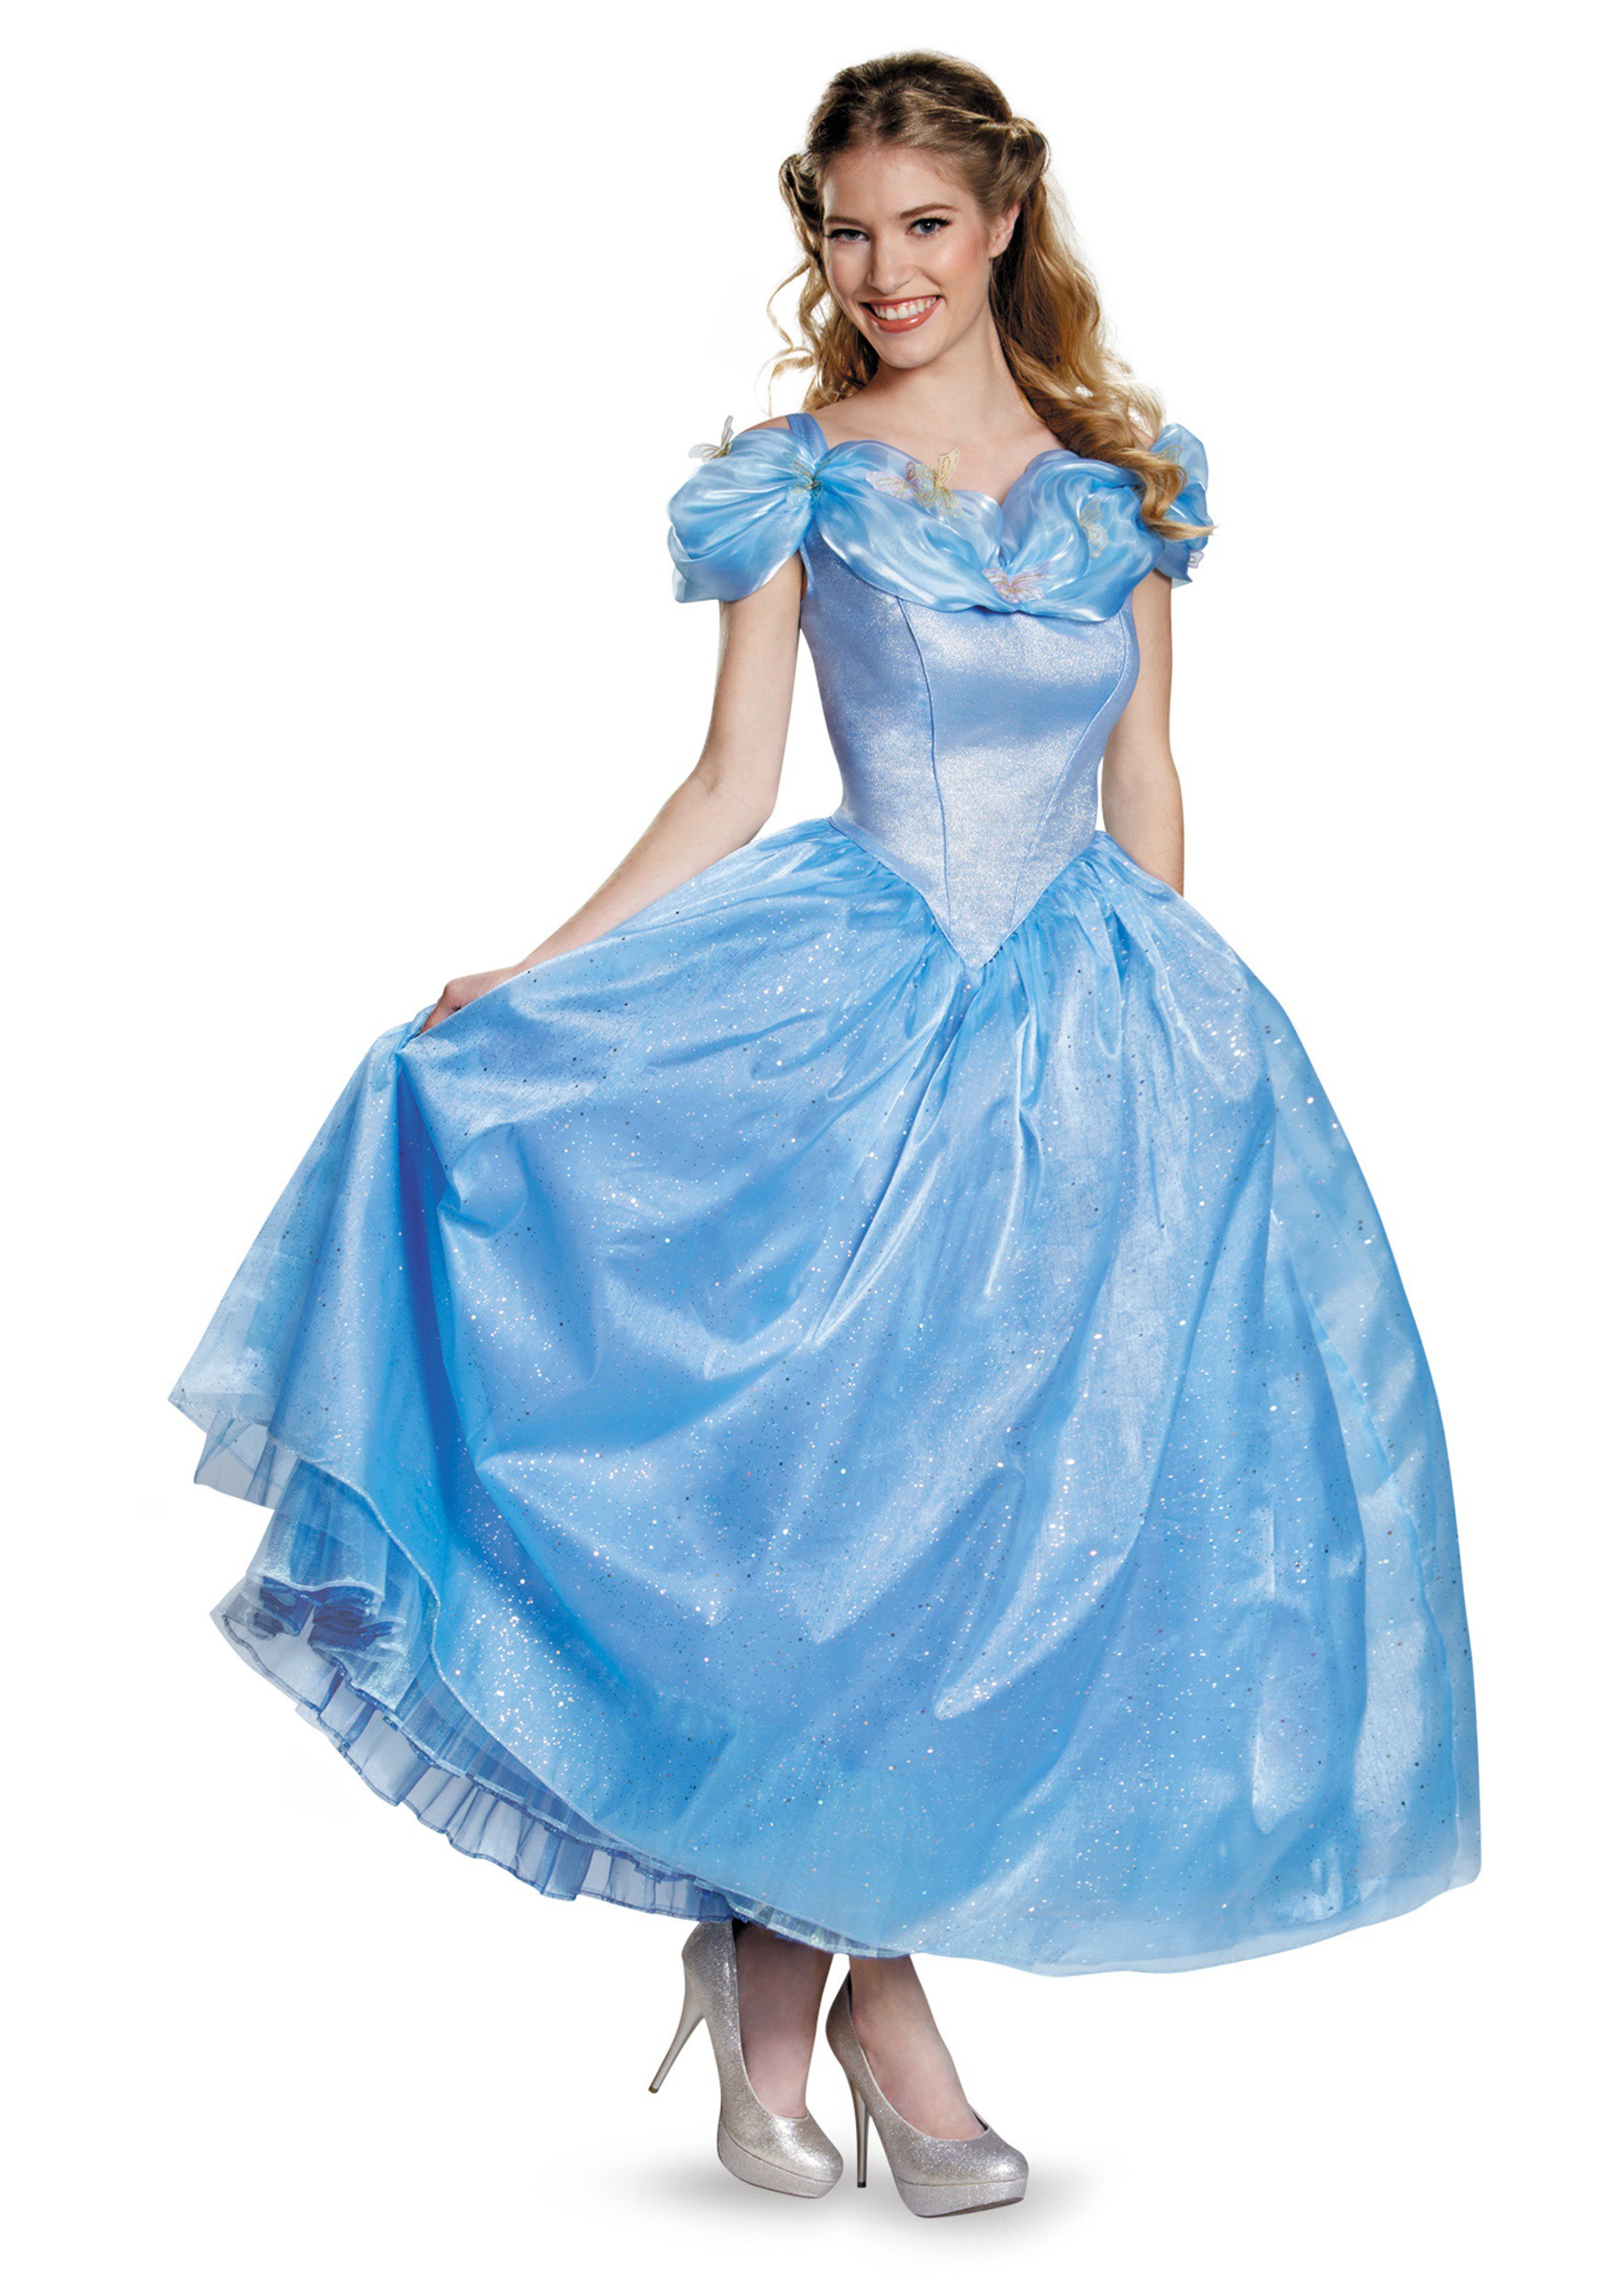 Cinderella DIY Costumes
 Women s Cinderella Movie Prestige Costume